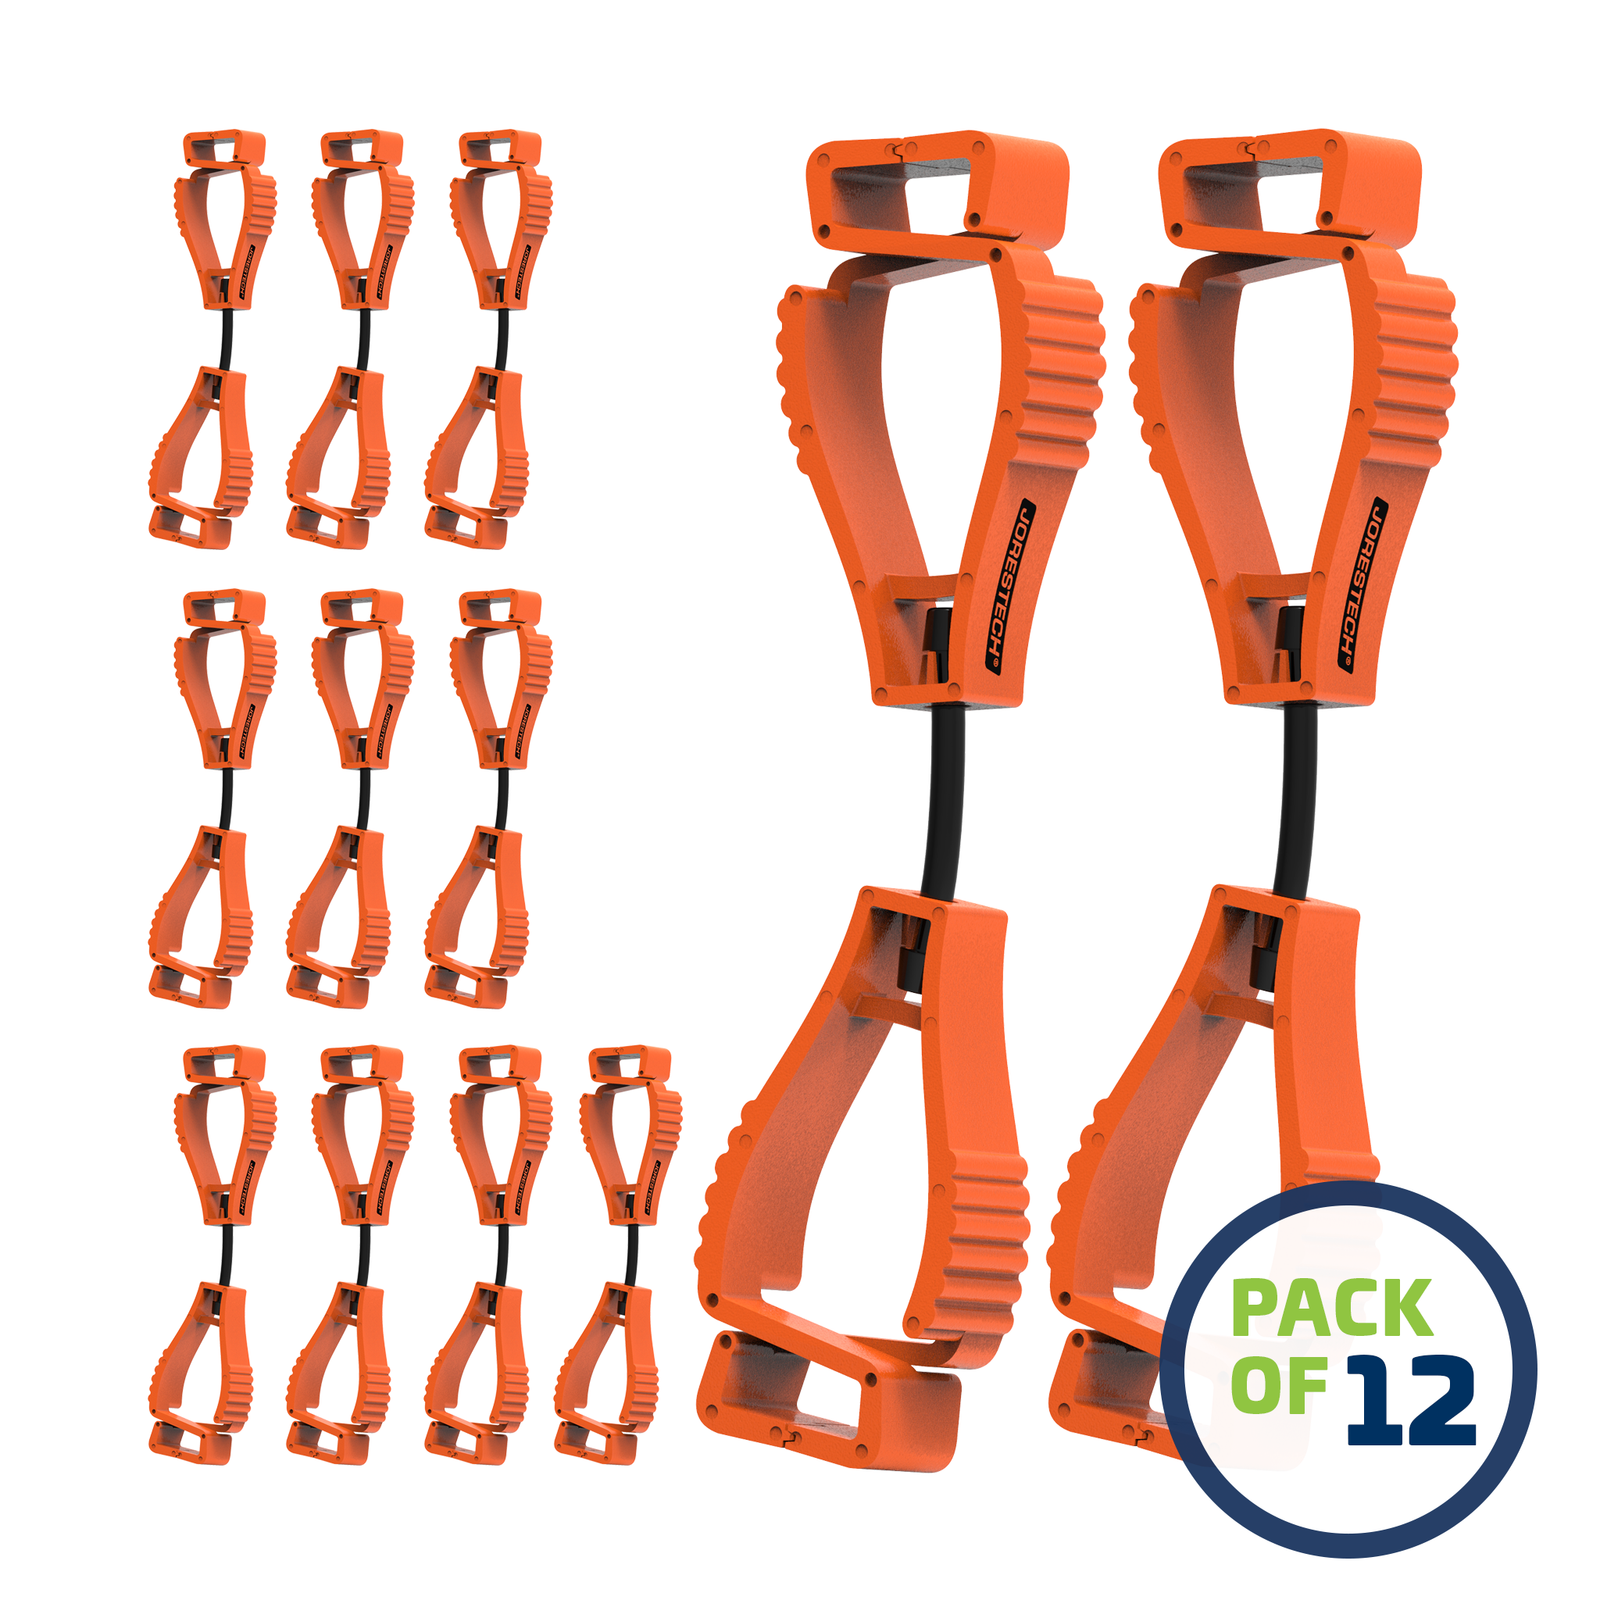 Pack of 12 Orange JORESTECH glove clip safety holders